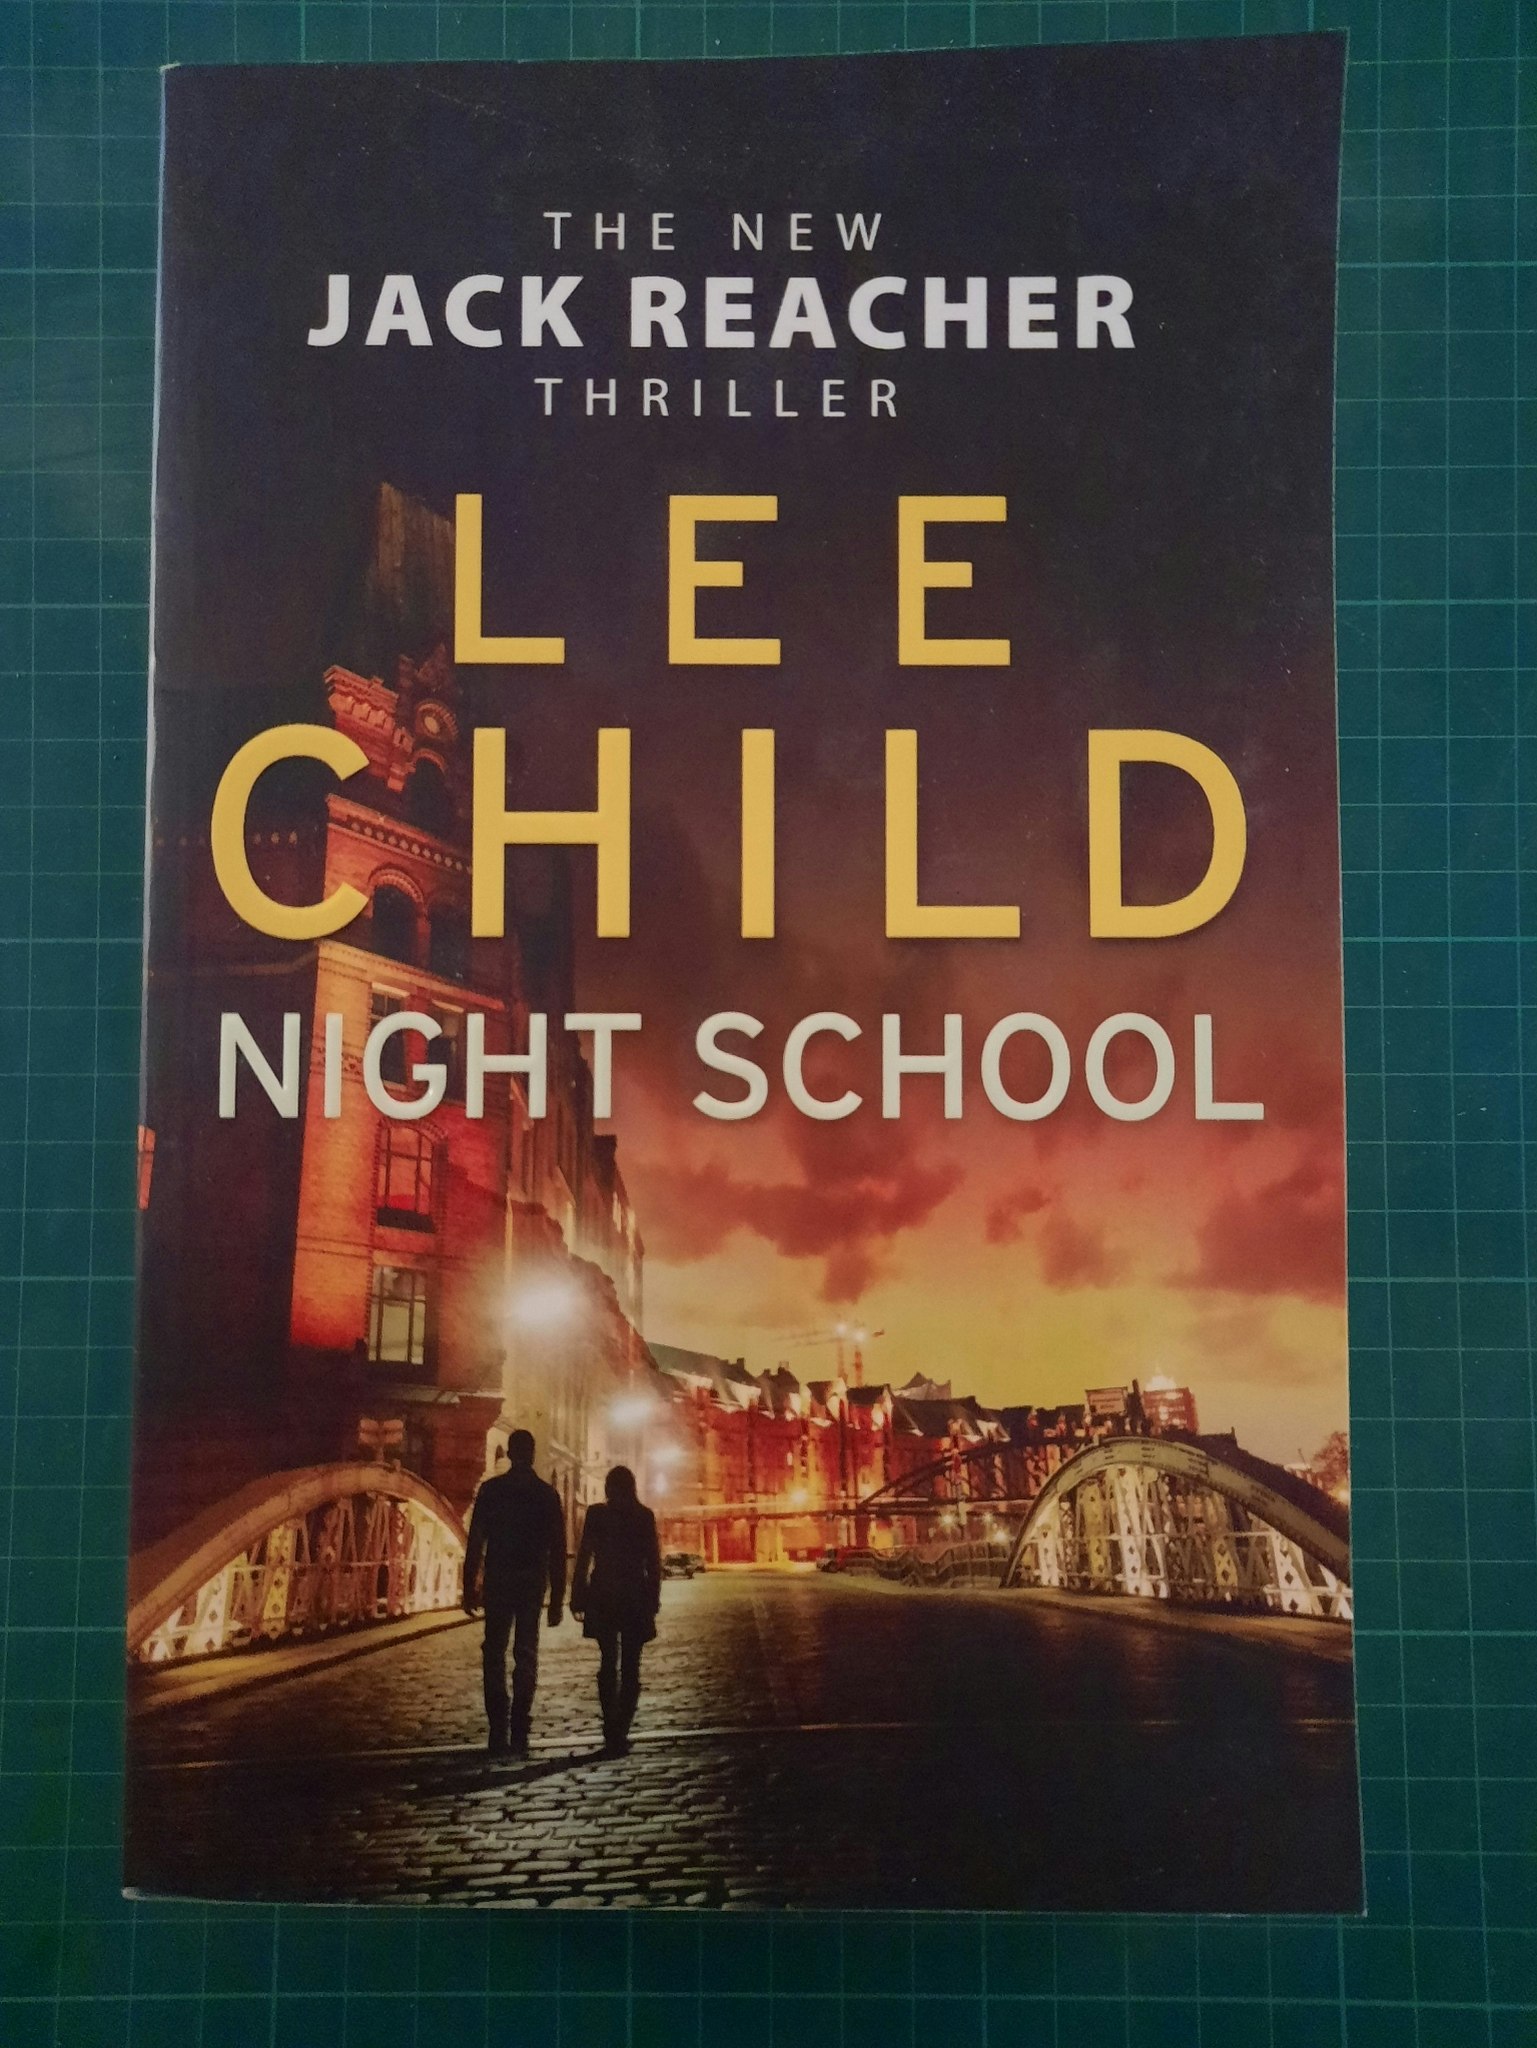 Lee Child : Night school